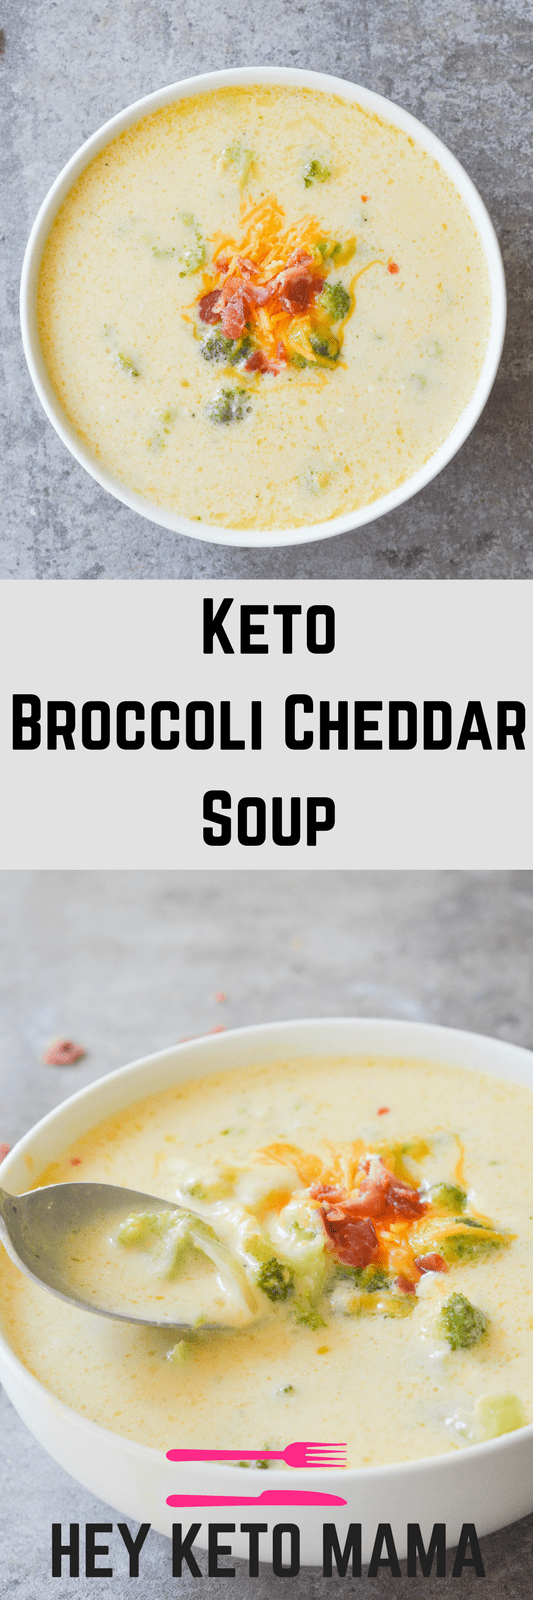 Keto Broccoli Cheddar Soup - Hey Keto Mama